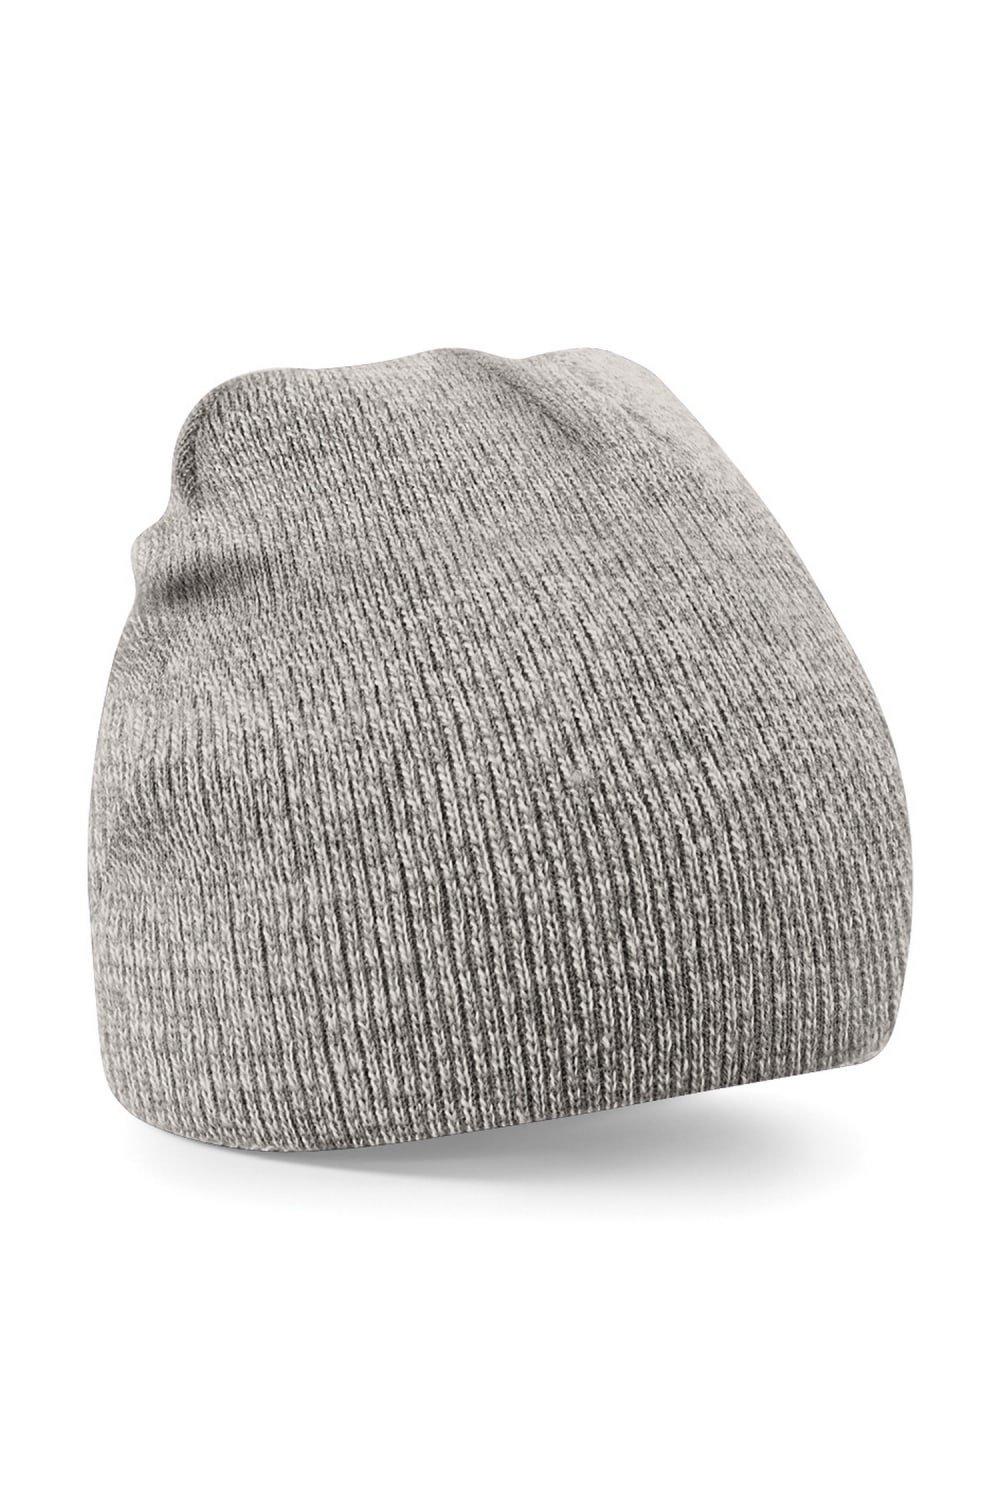 Простая базовая вязаная зимняя шапка-бини Beechfield, серый